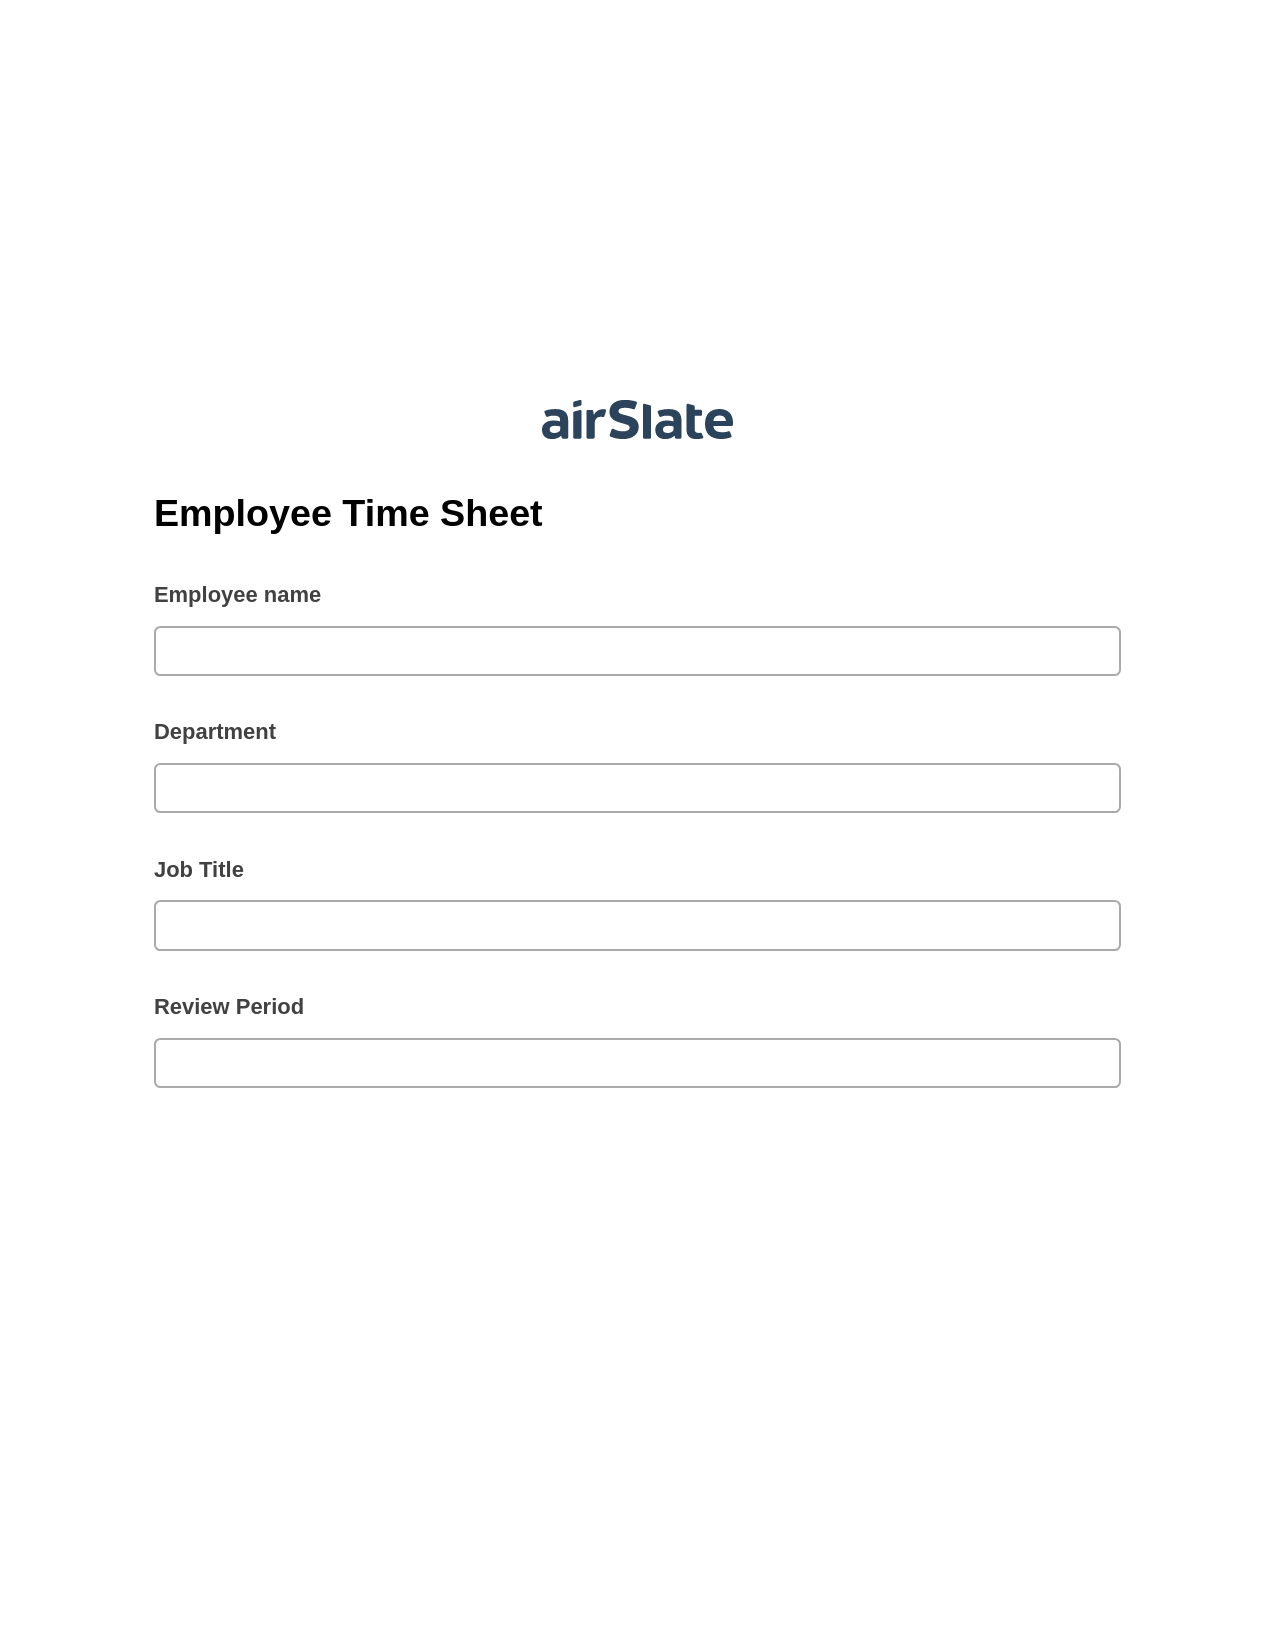 Multirole Employee Time Sheet System Bot - Slack Two-Way Binding Bot, Create slate addon, Archive to OneDrive Bot